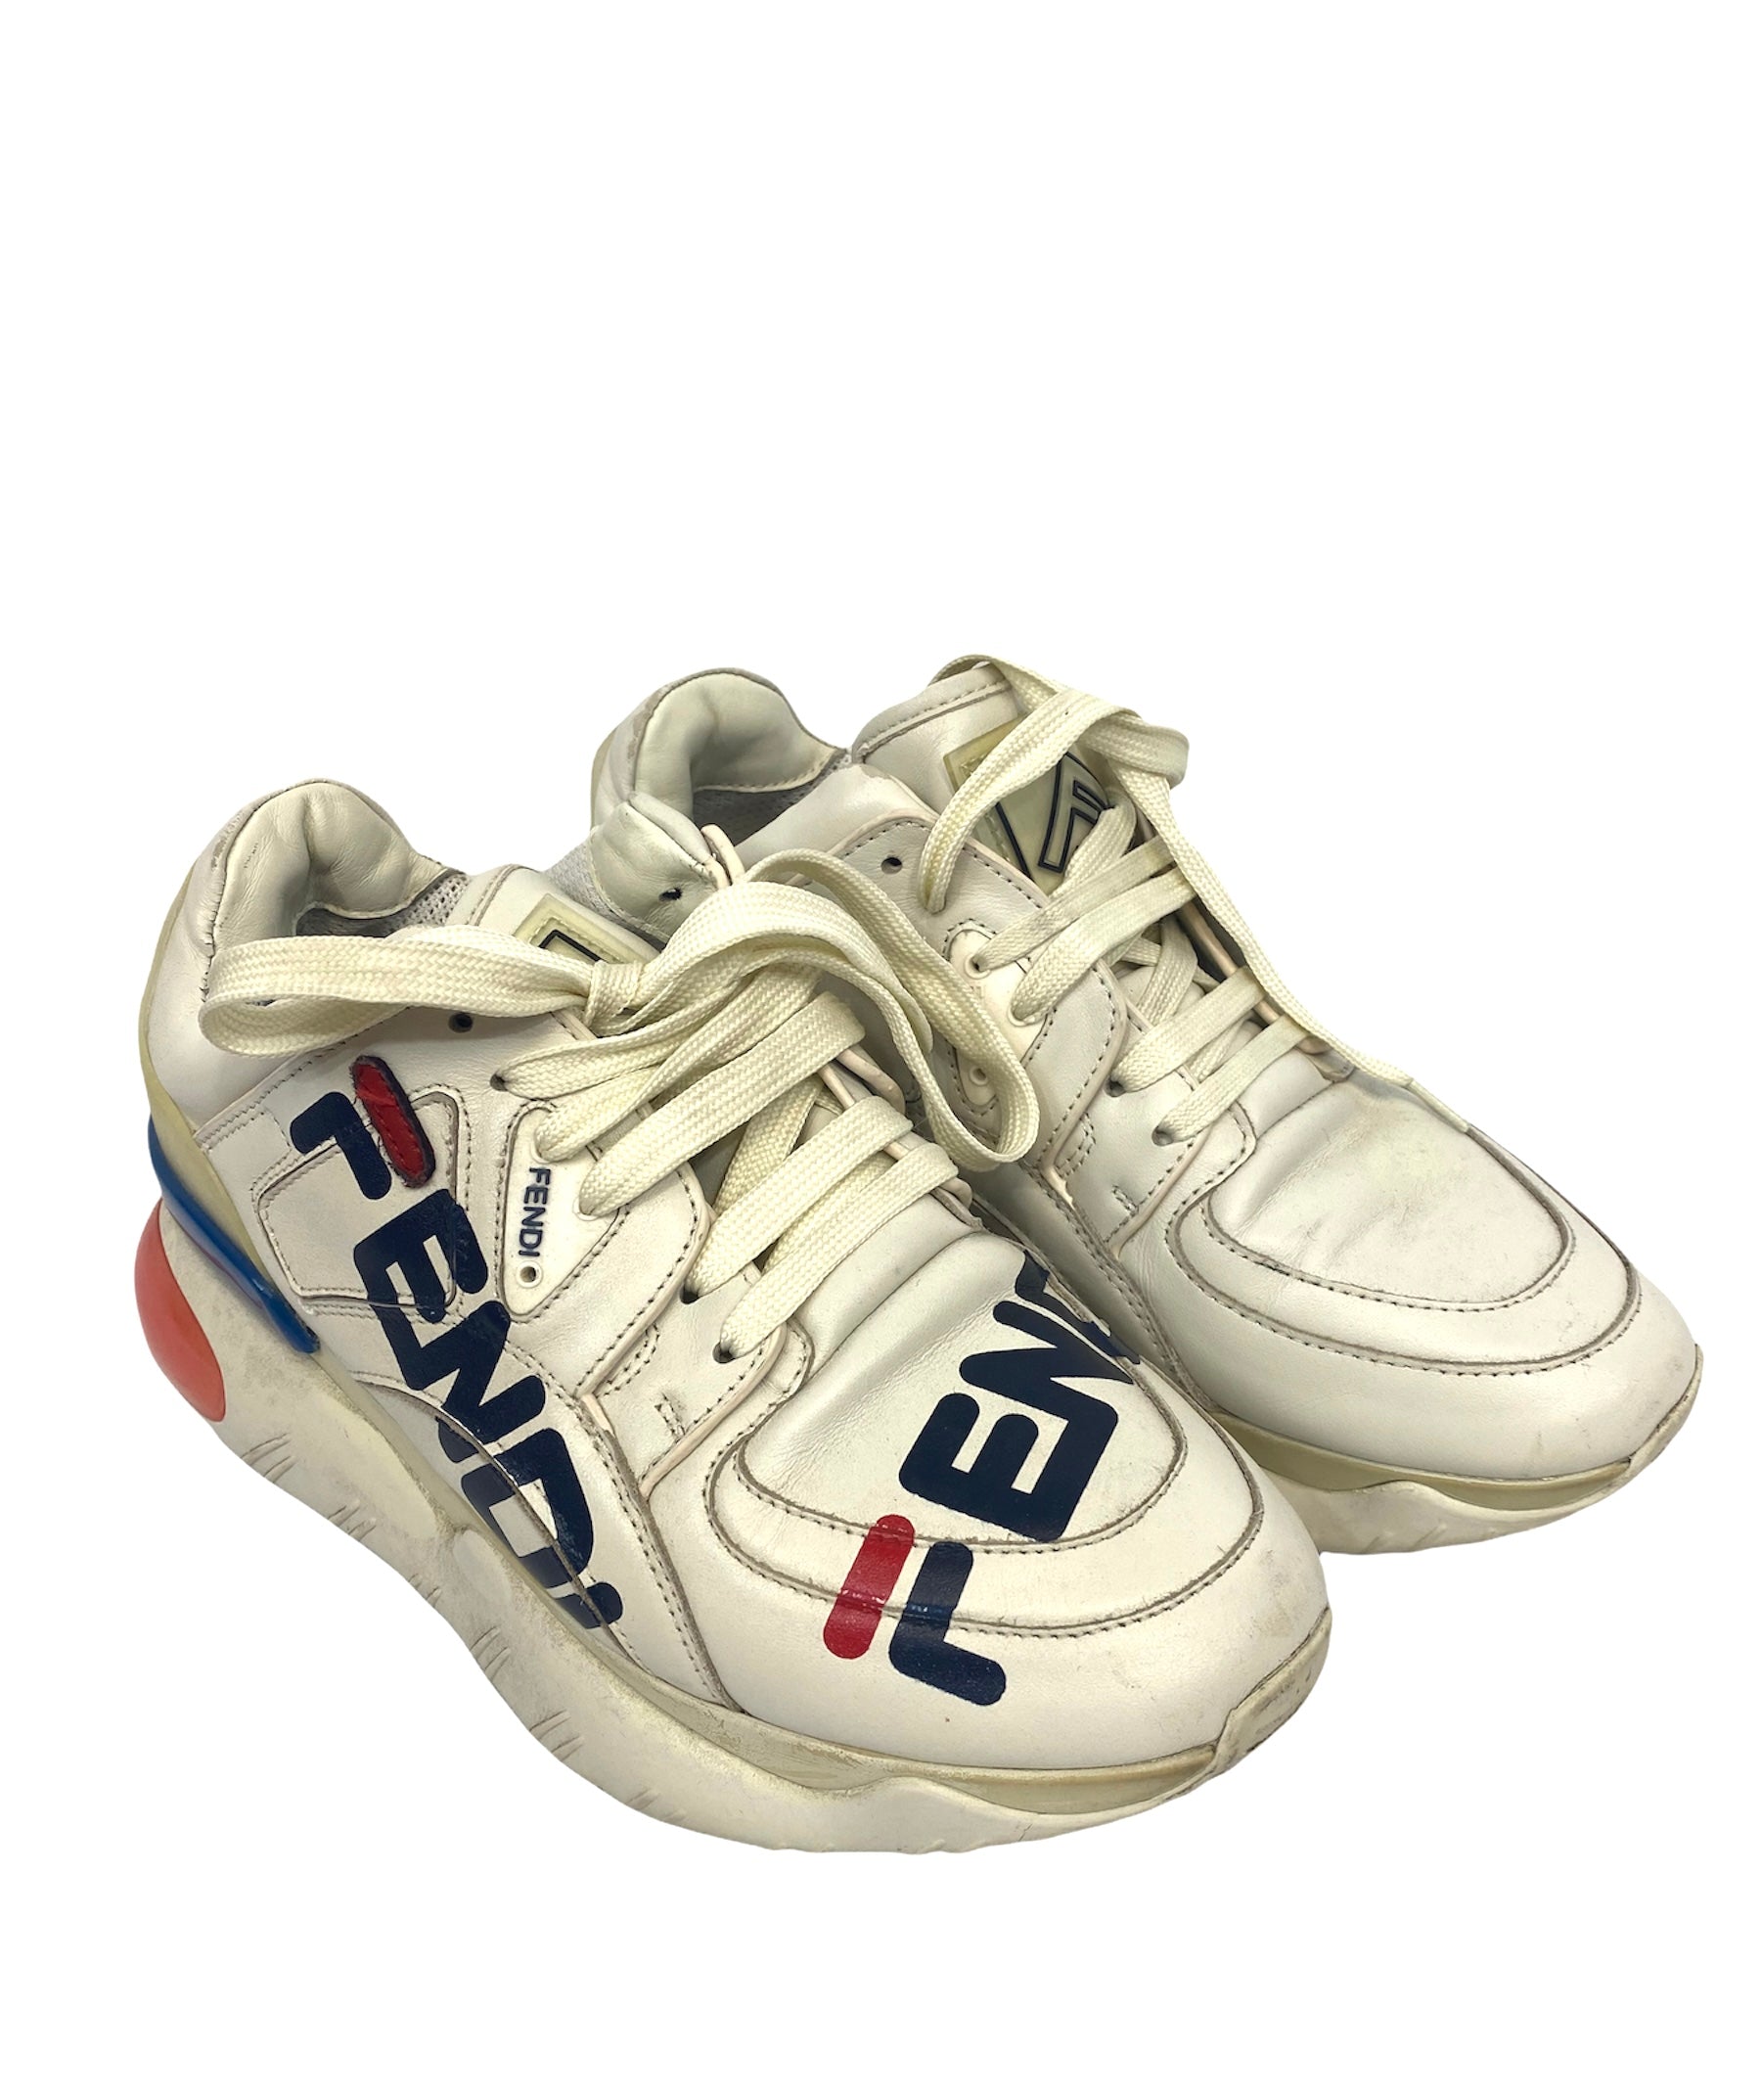 Fendi Mania Sneaker | Fendi shoes, Fendi, Womens sneakers